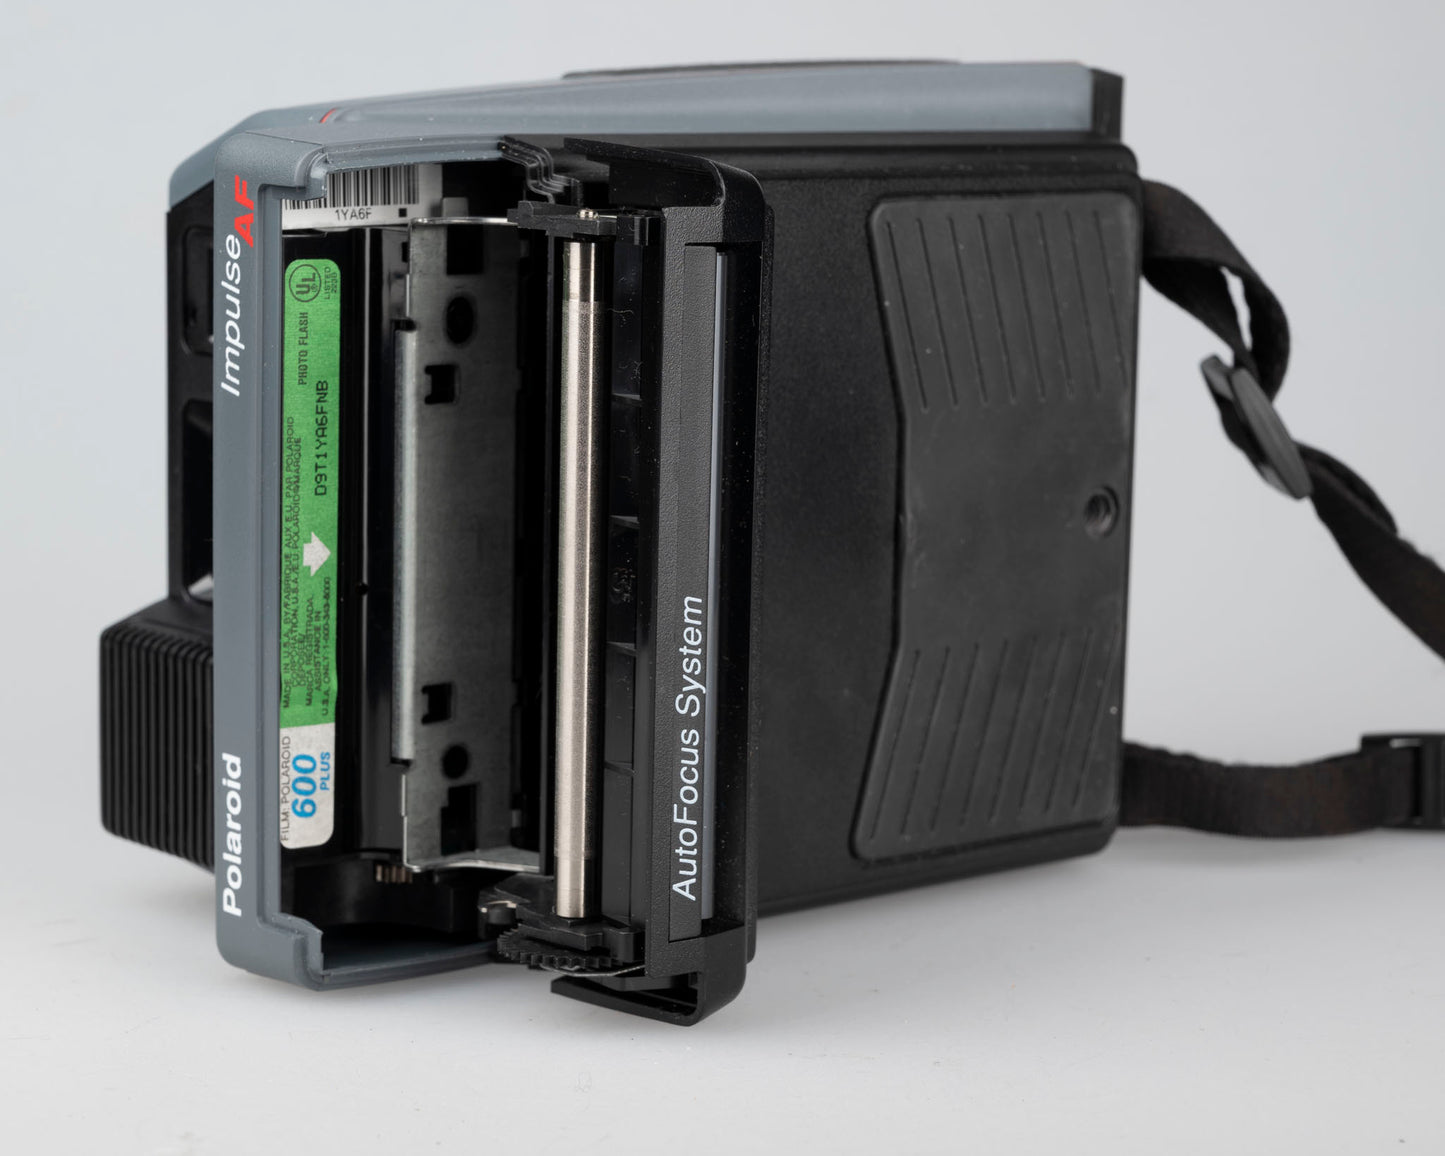 Polaroid Impulse AF Autofocus instant camera (serial D9T1YA6FNB)